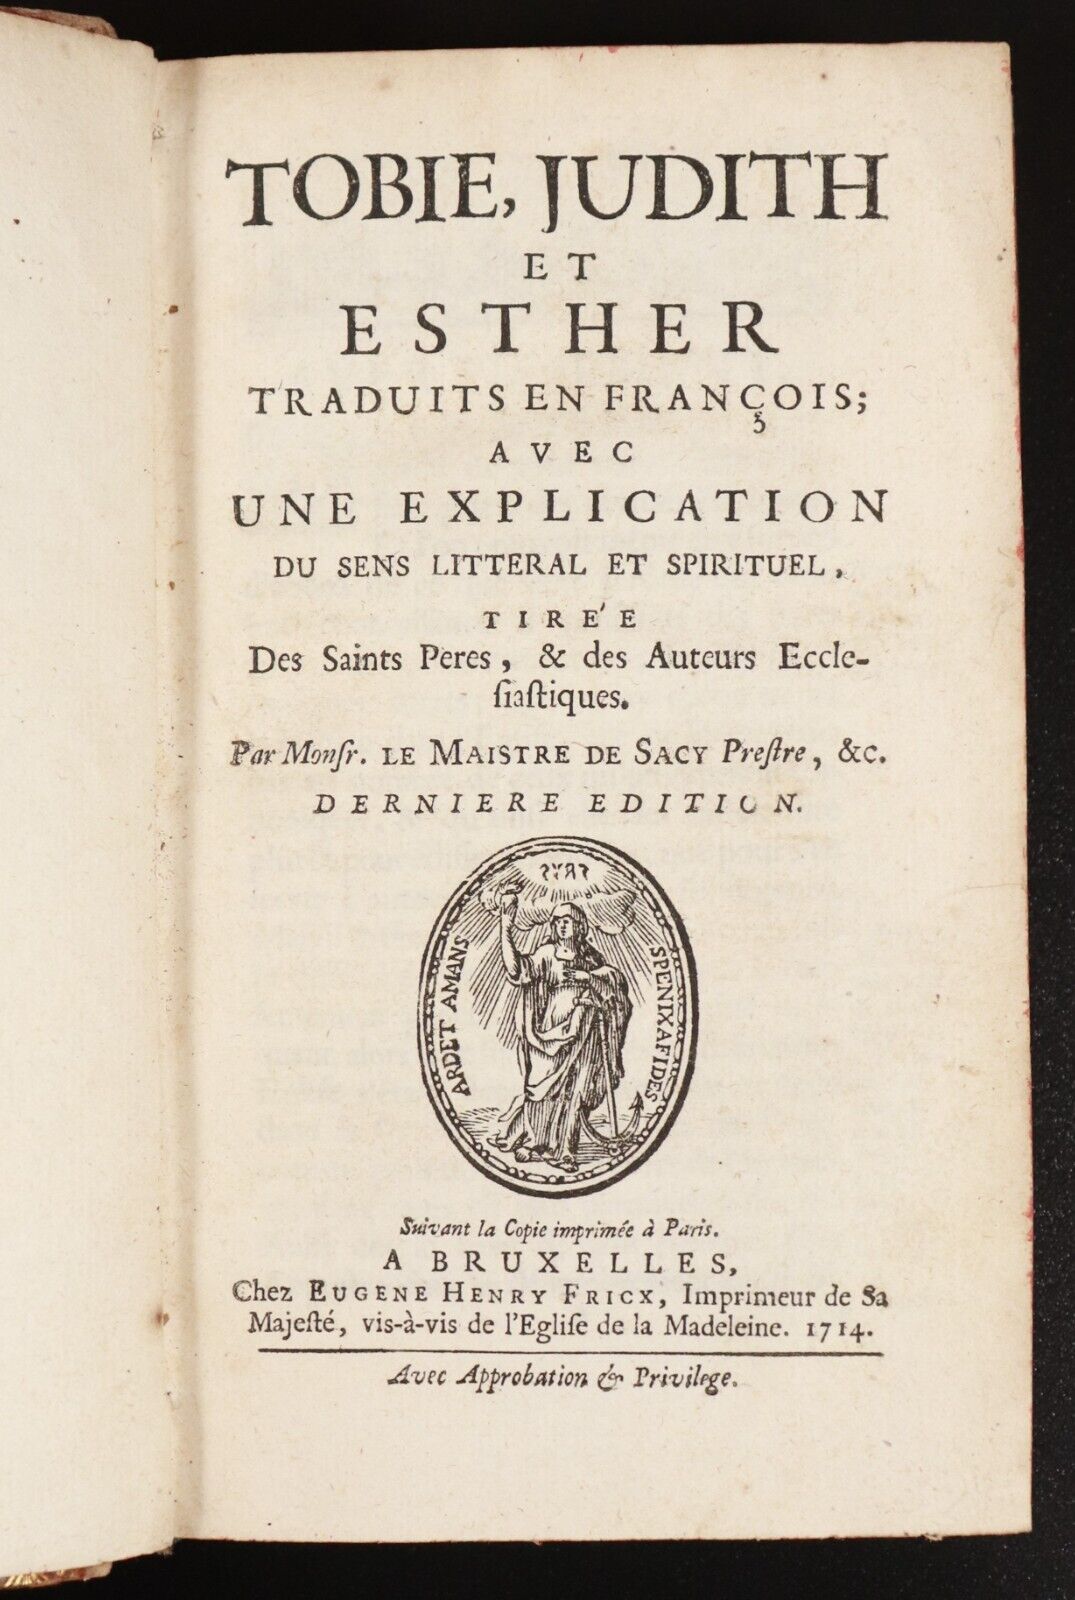 1719 Tobie Judith et Esther Antiquarian French Theology Book Maistre De Sacy - 0